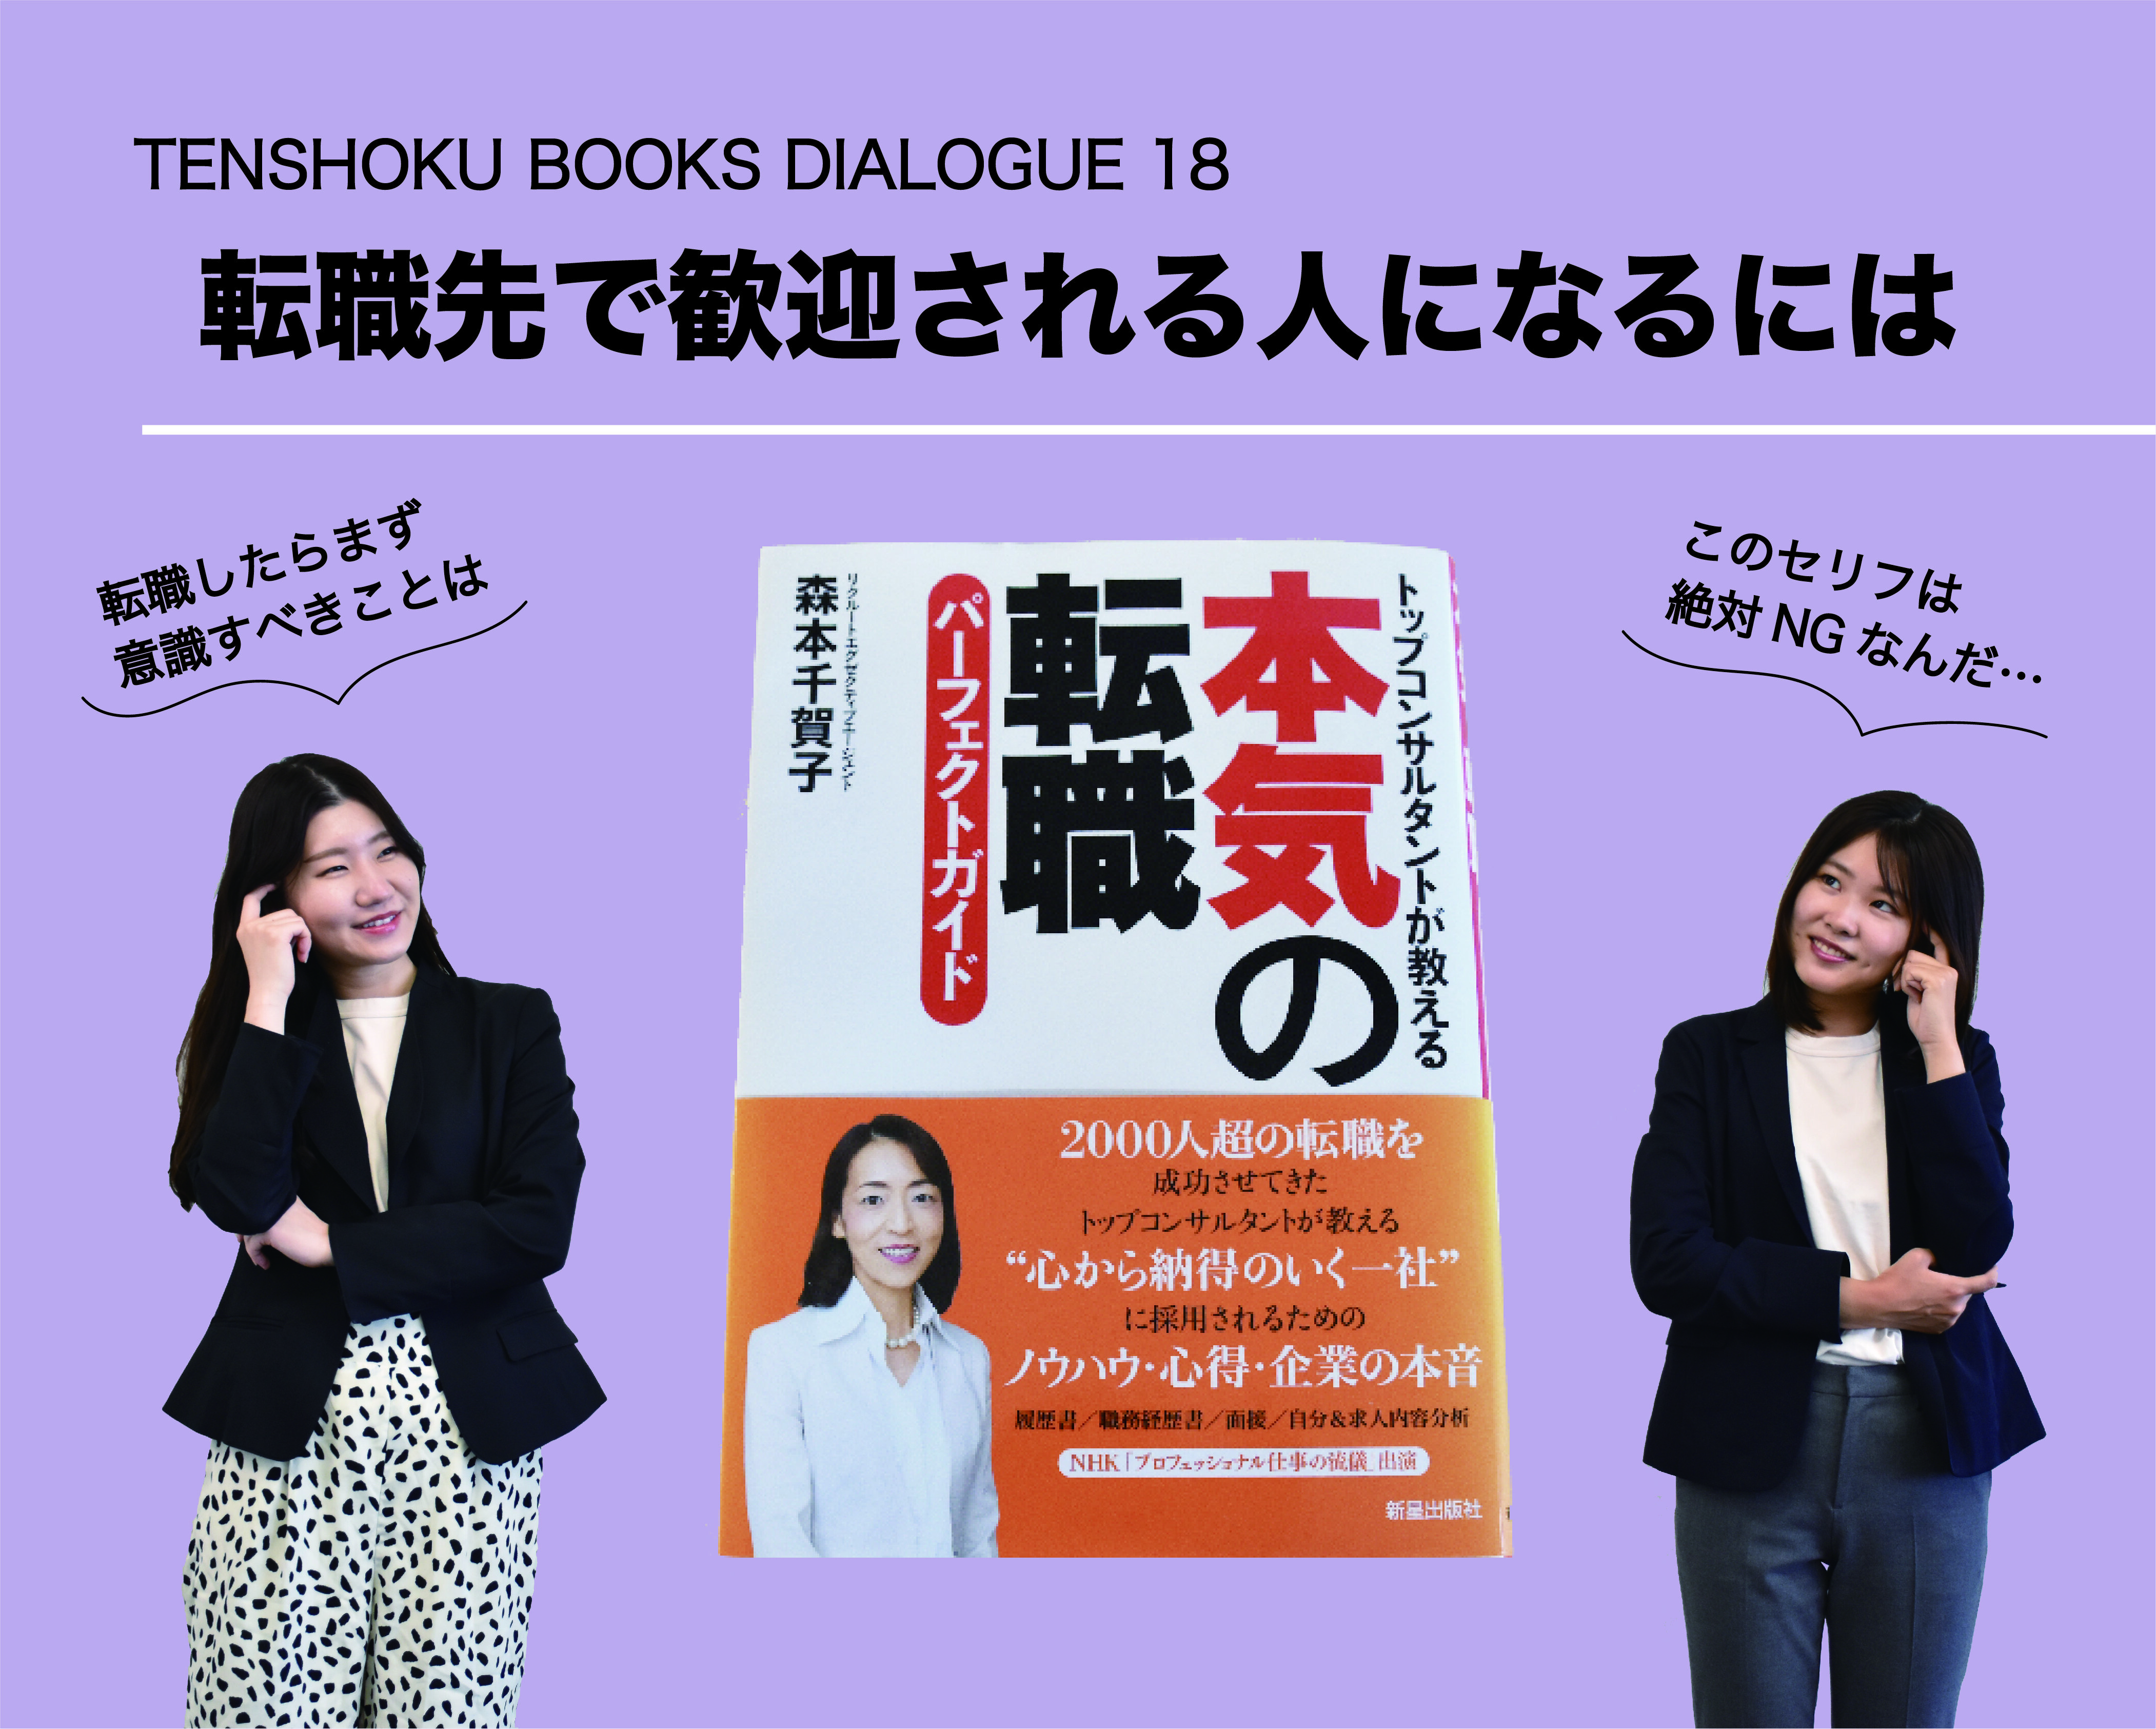 【TENSHOKU BOOKS DIALOGUE18】 『本気の転職パーフェクトガイド』から考える転職先で歓迎される行動や姿勢